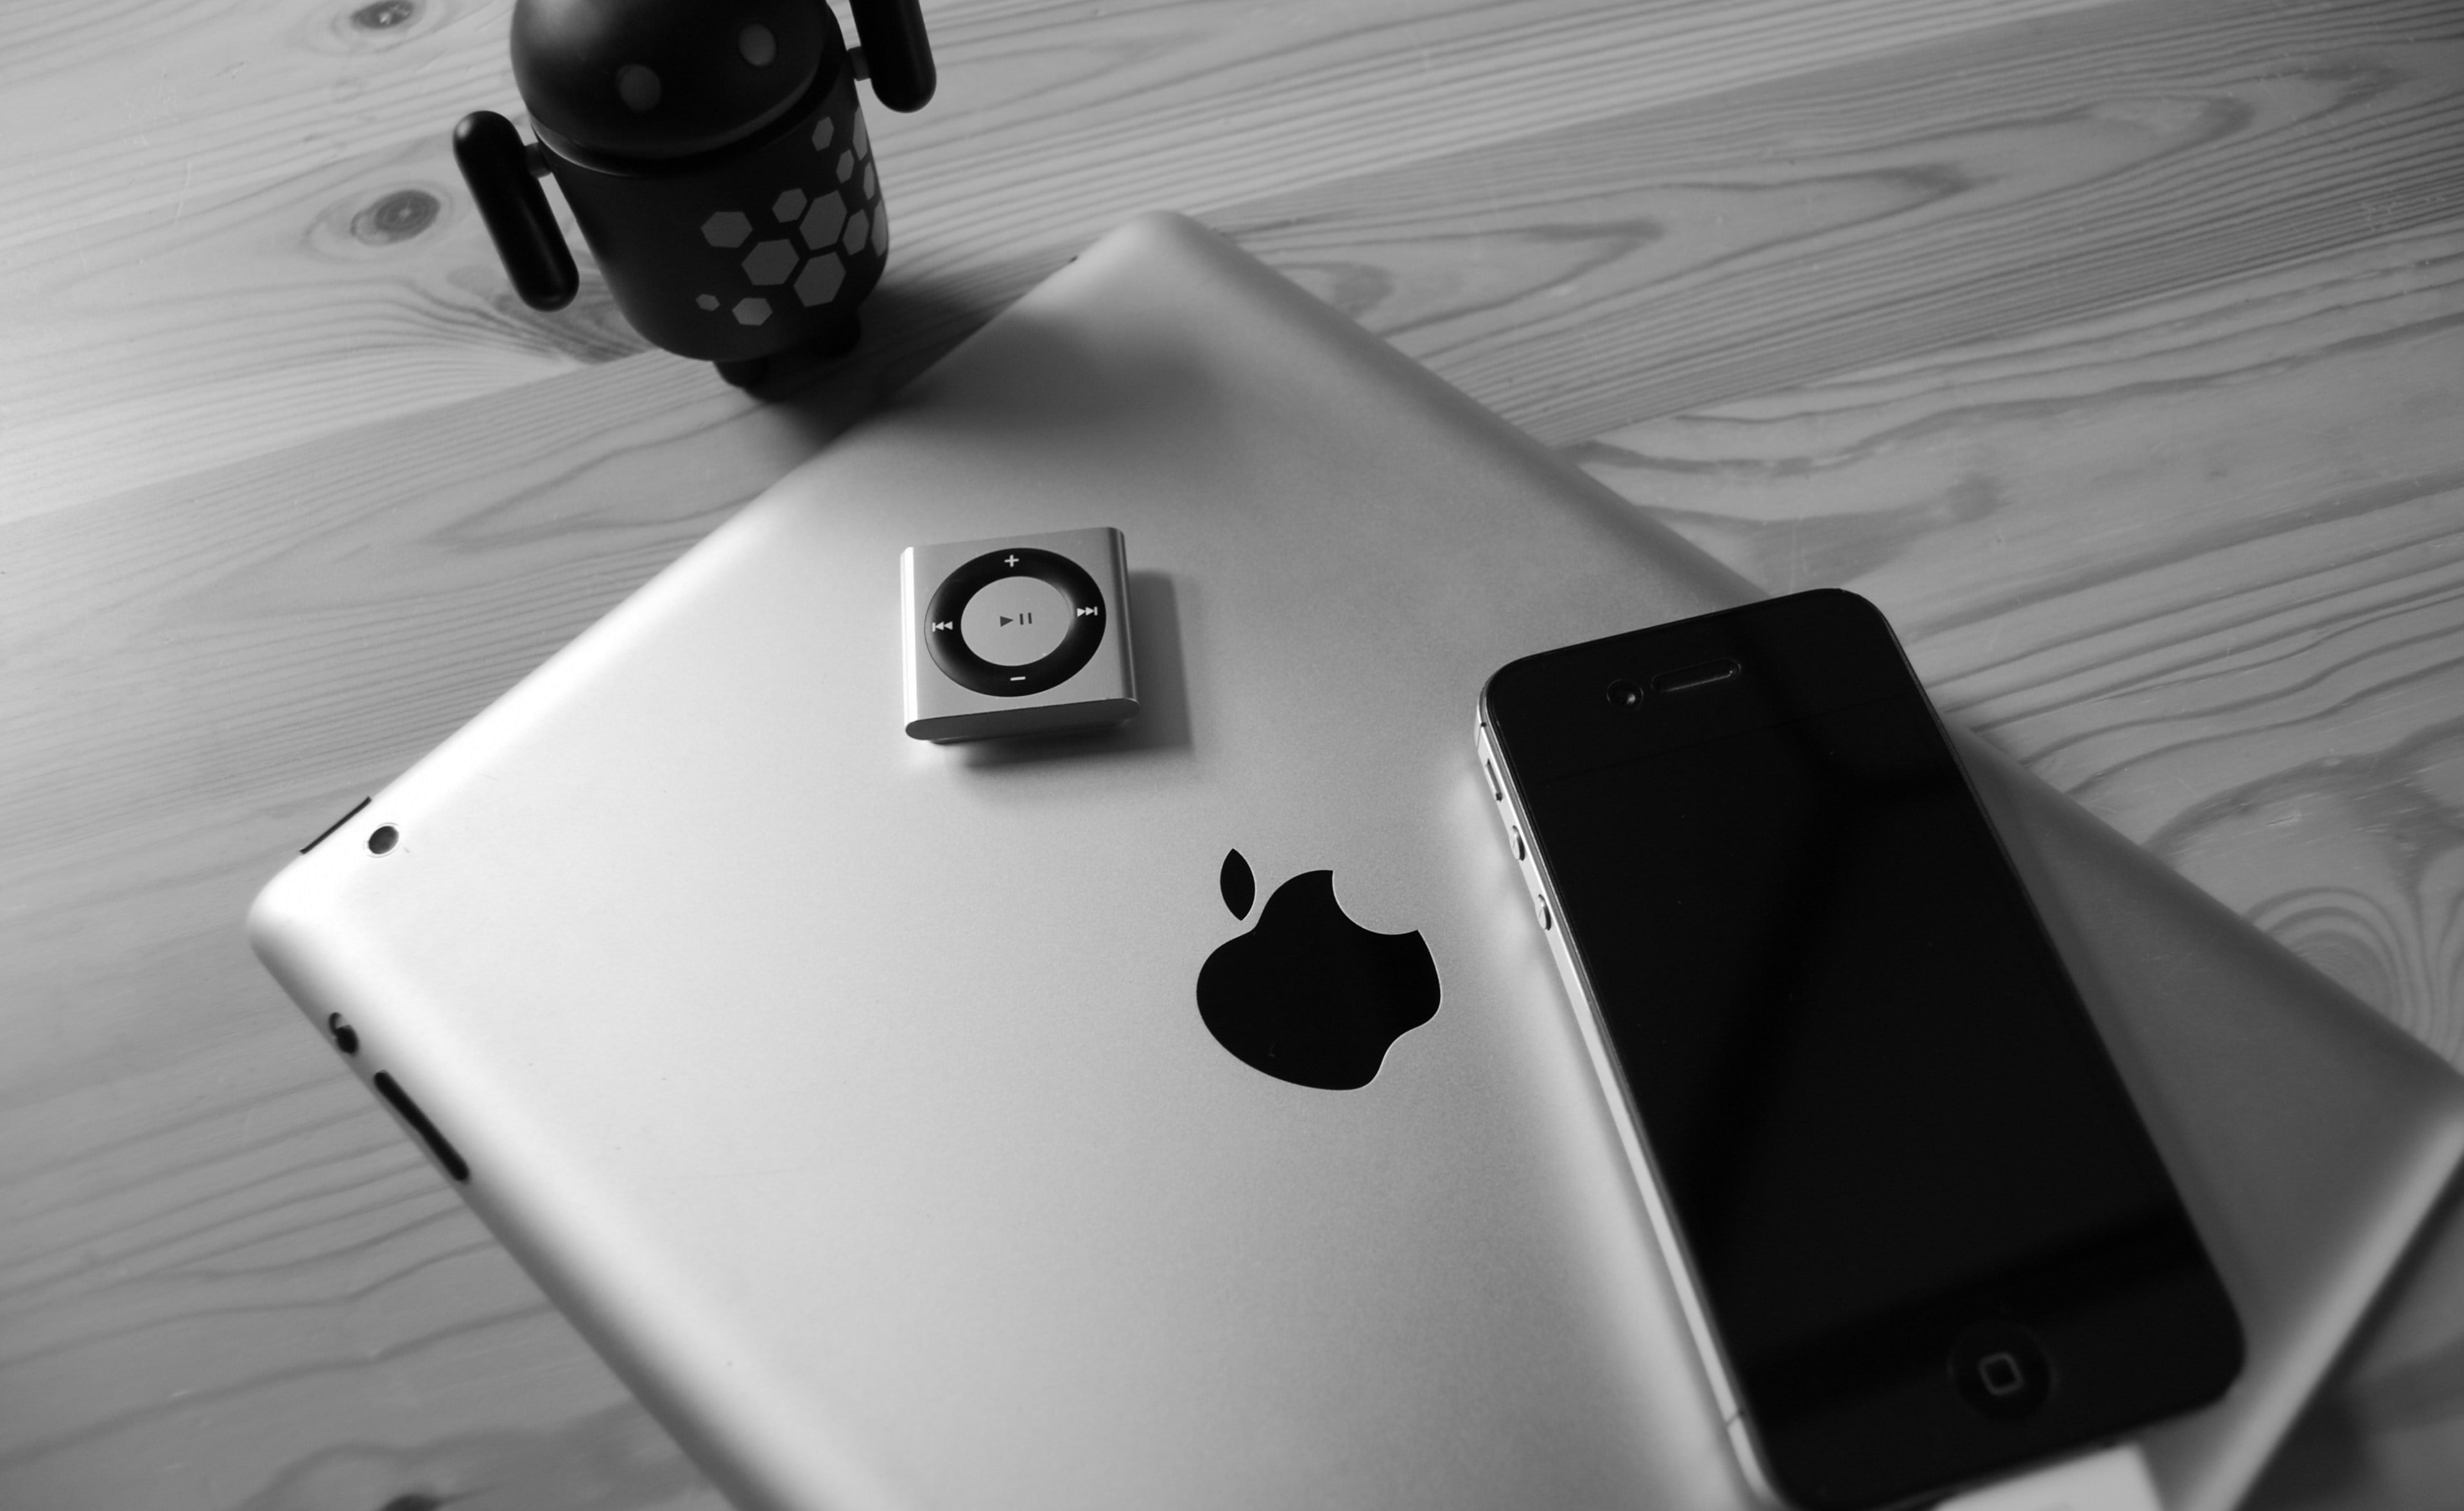 black iPhone 4, space gray iPad 3, and gray iPod shuffle, apple